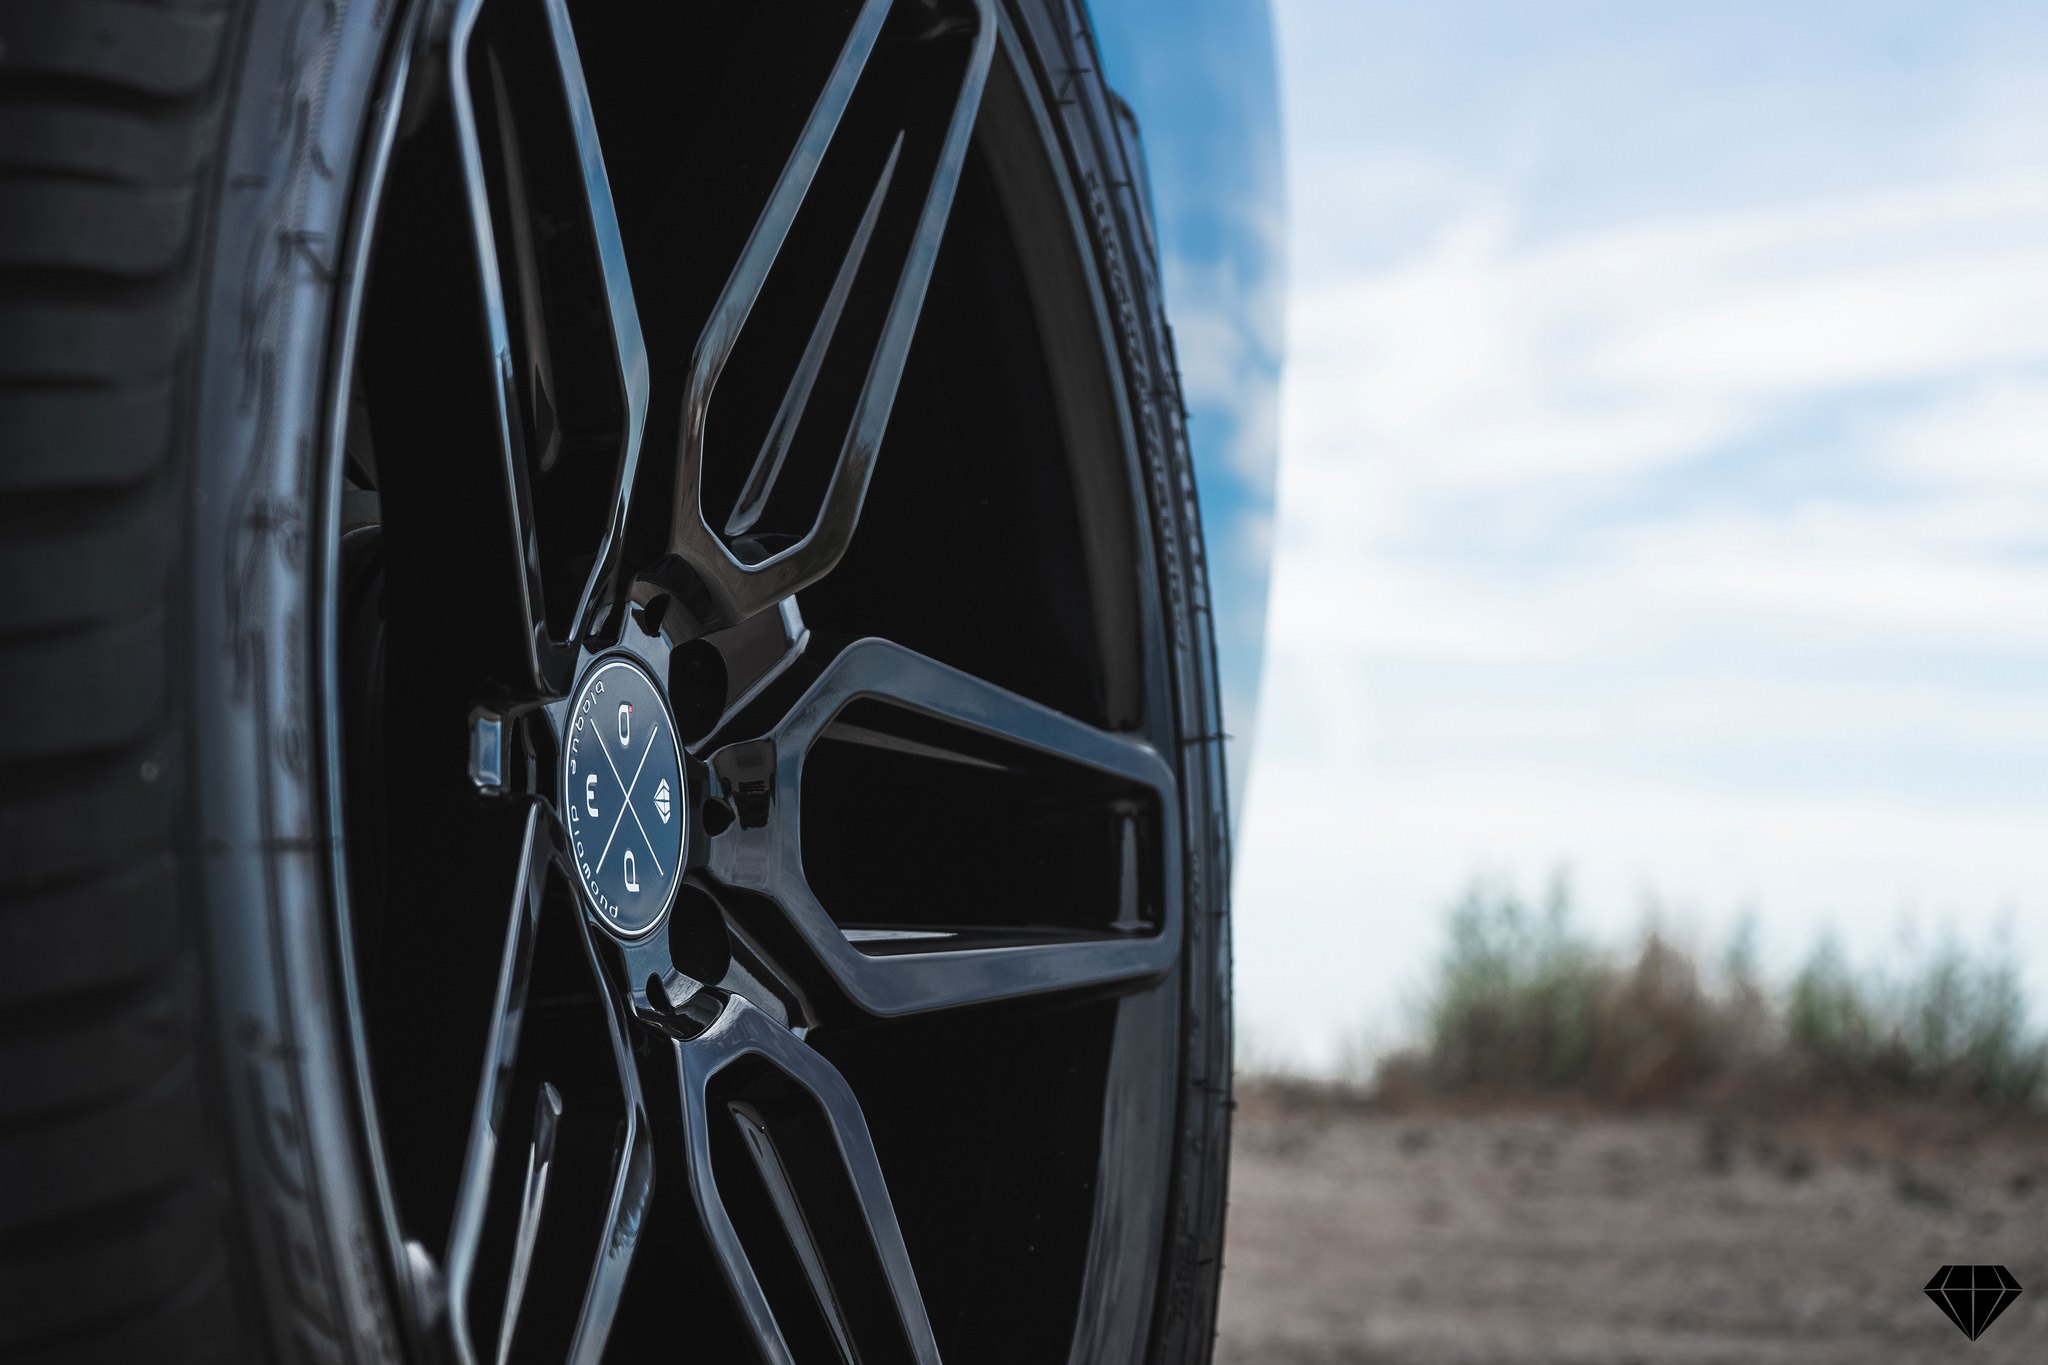 5 Spoke Blaque Diamond Rims on Blue Dodge Charger - Photo by Blaque Diamond Wheels